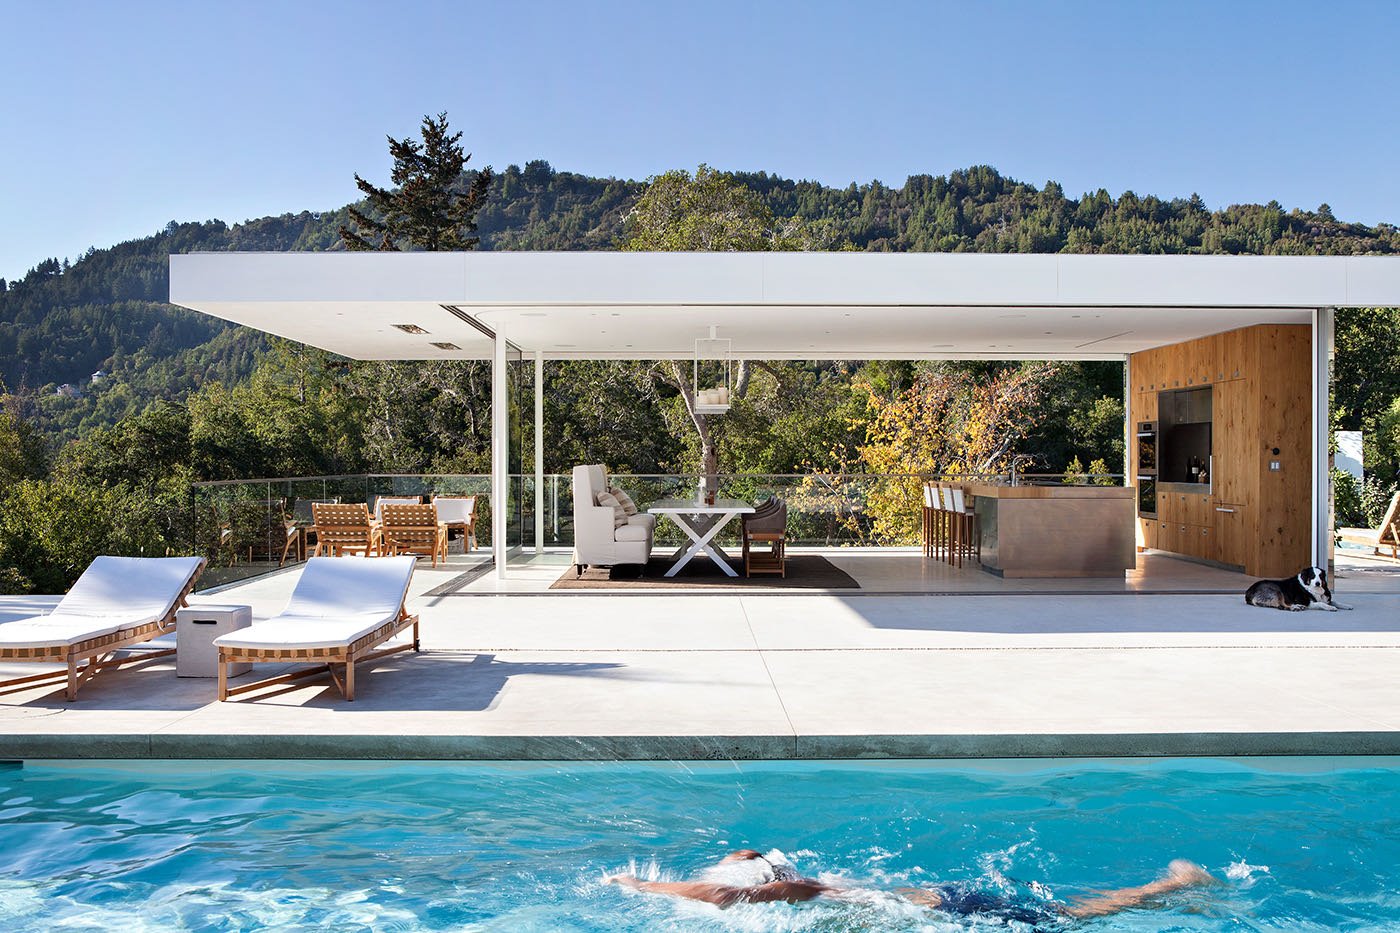 turner residence - jensen architects - pool